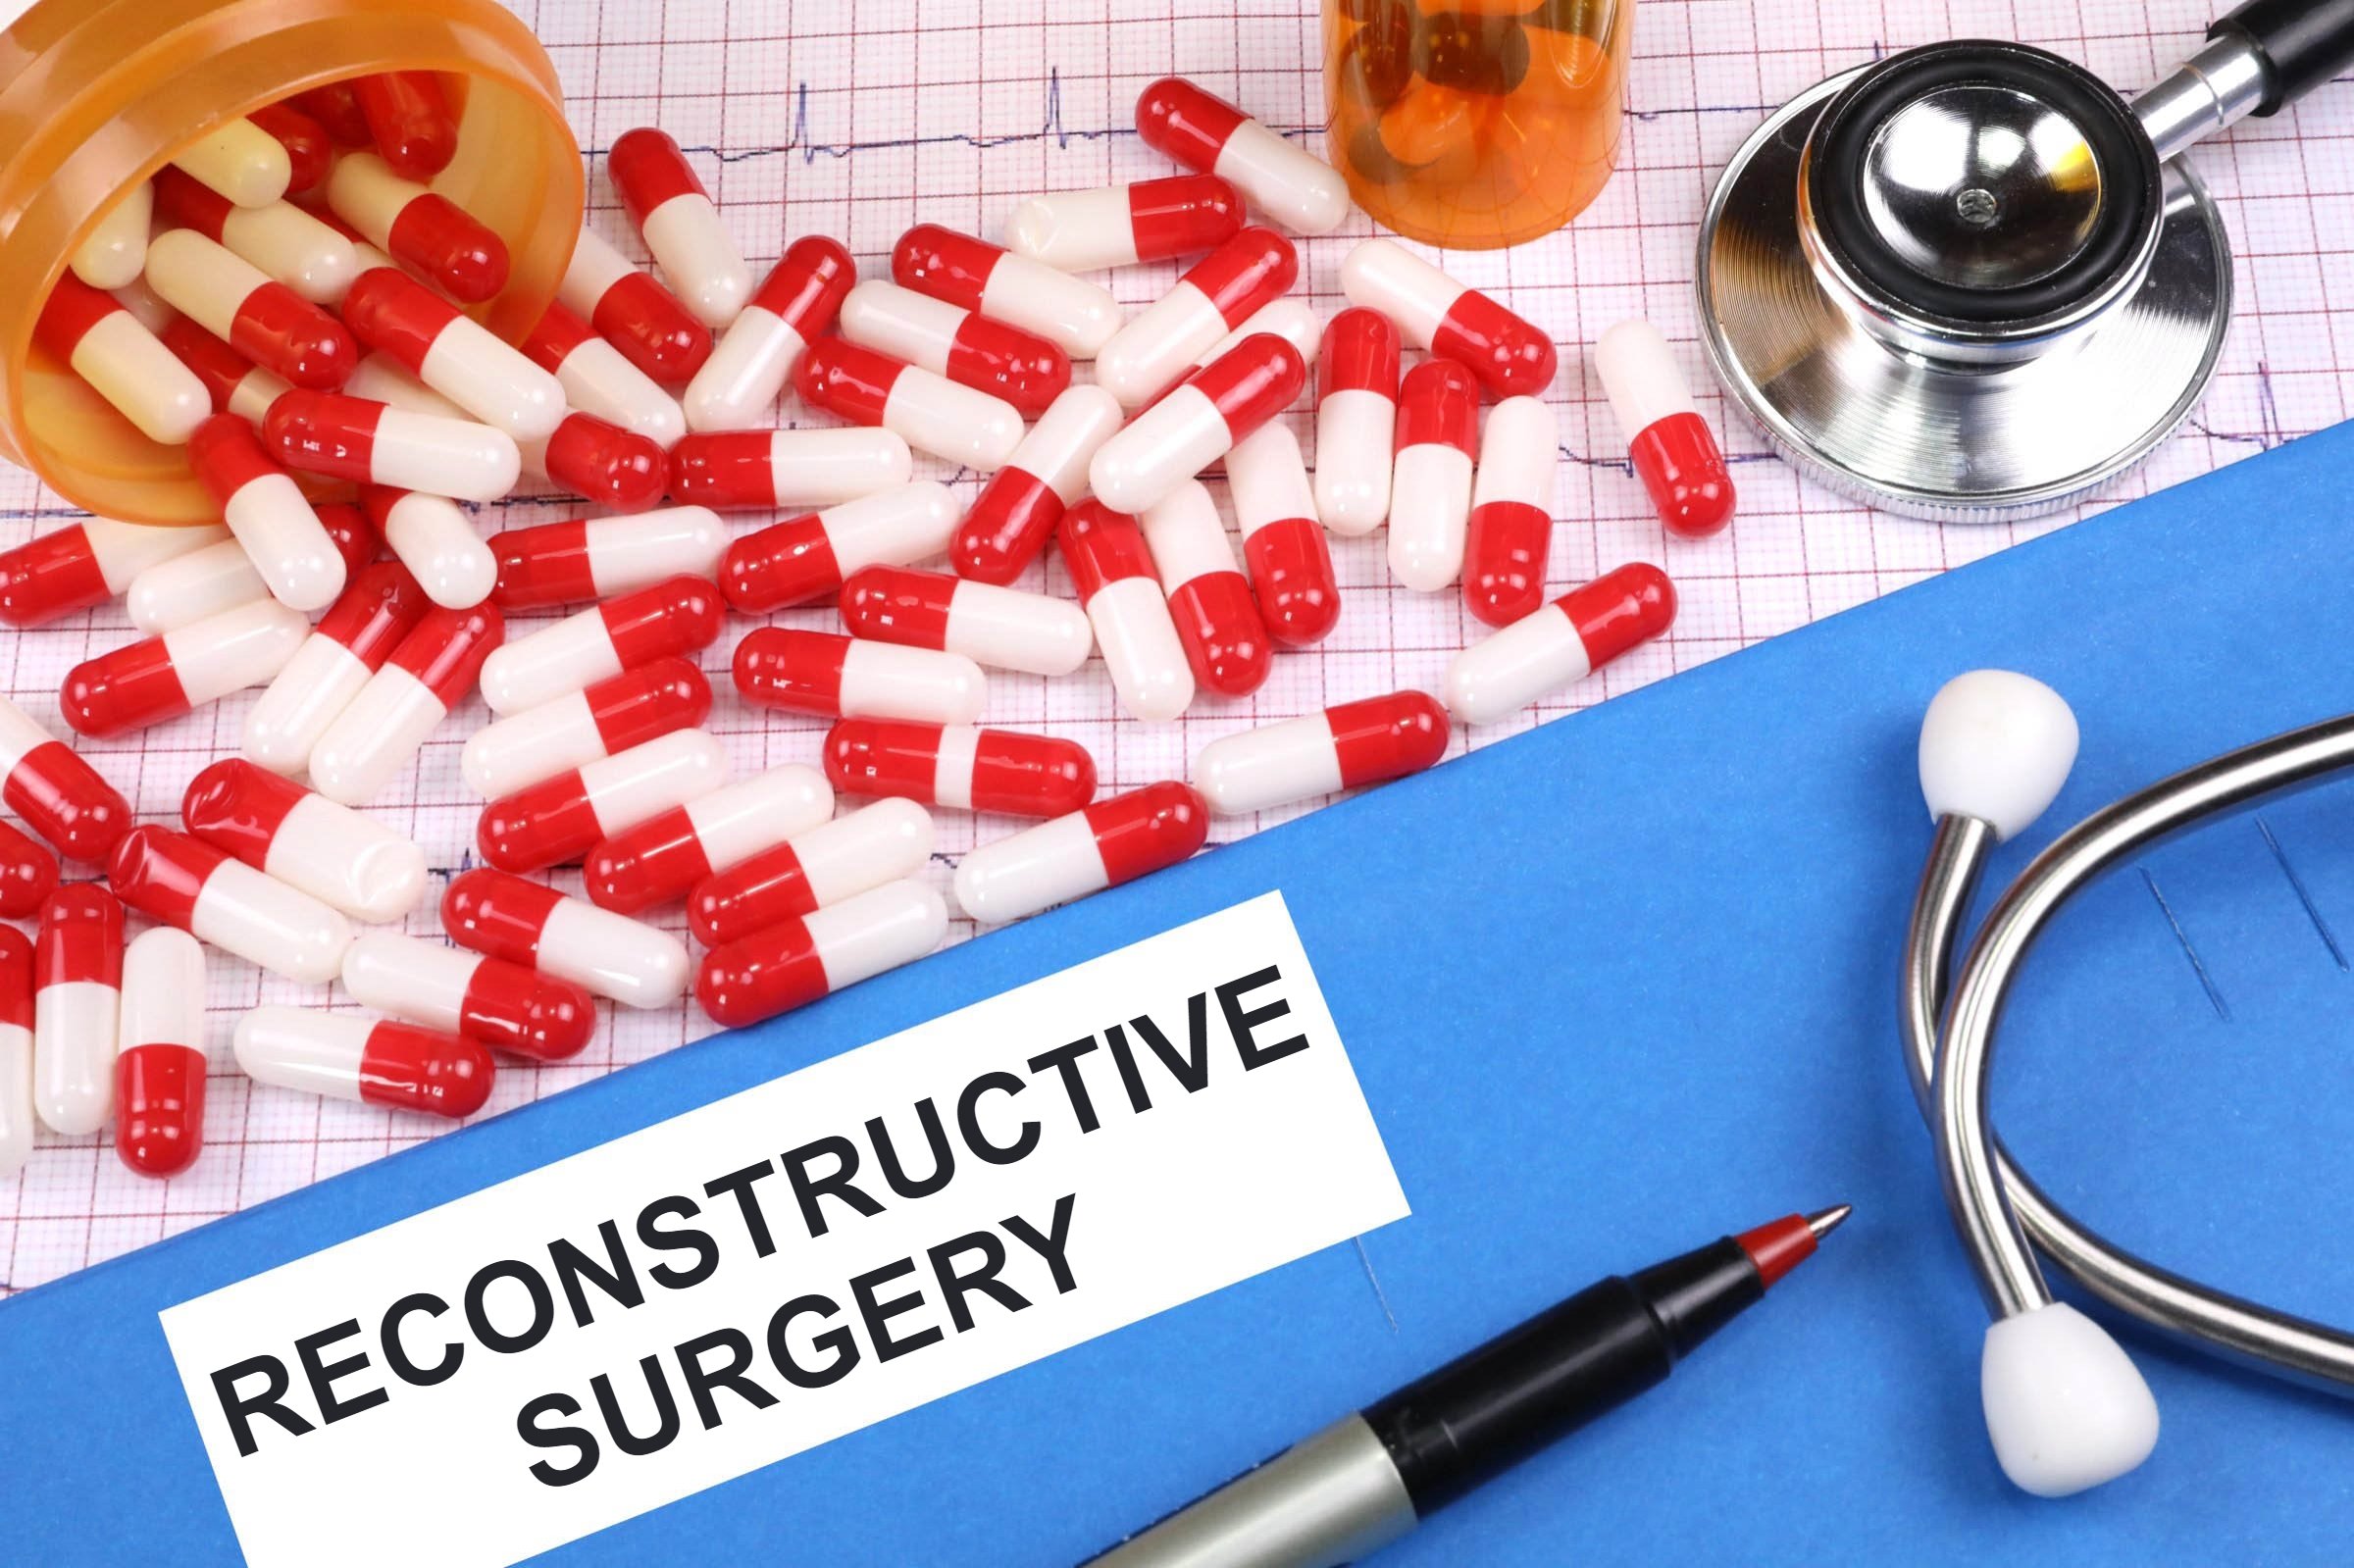 reconstructive surgery